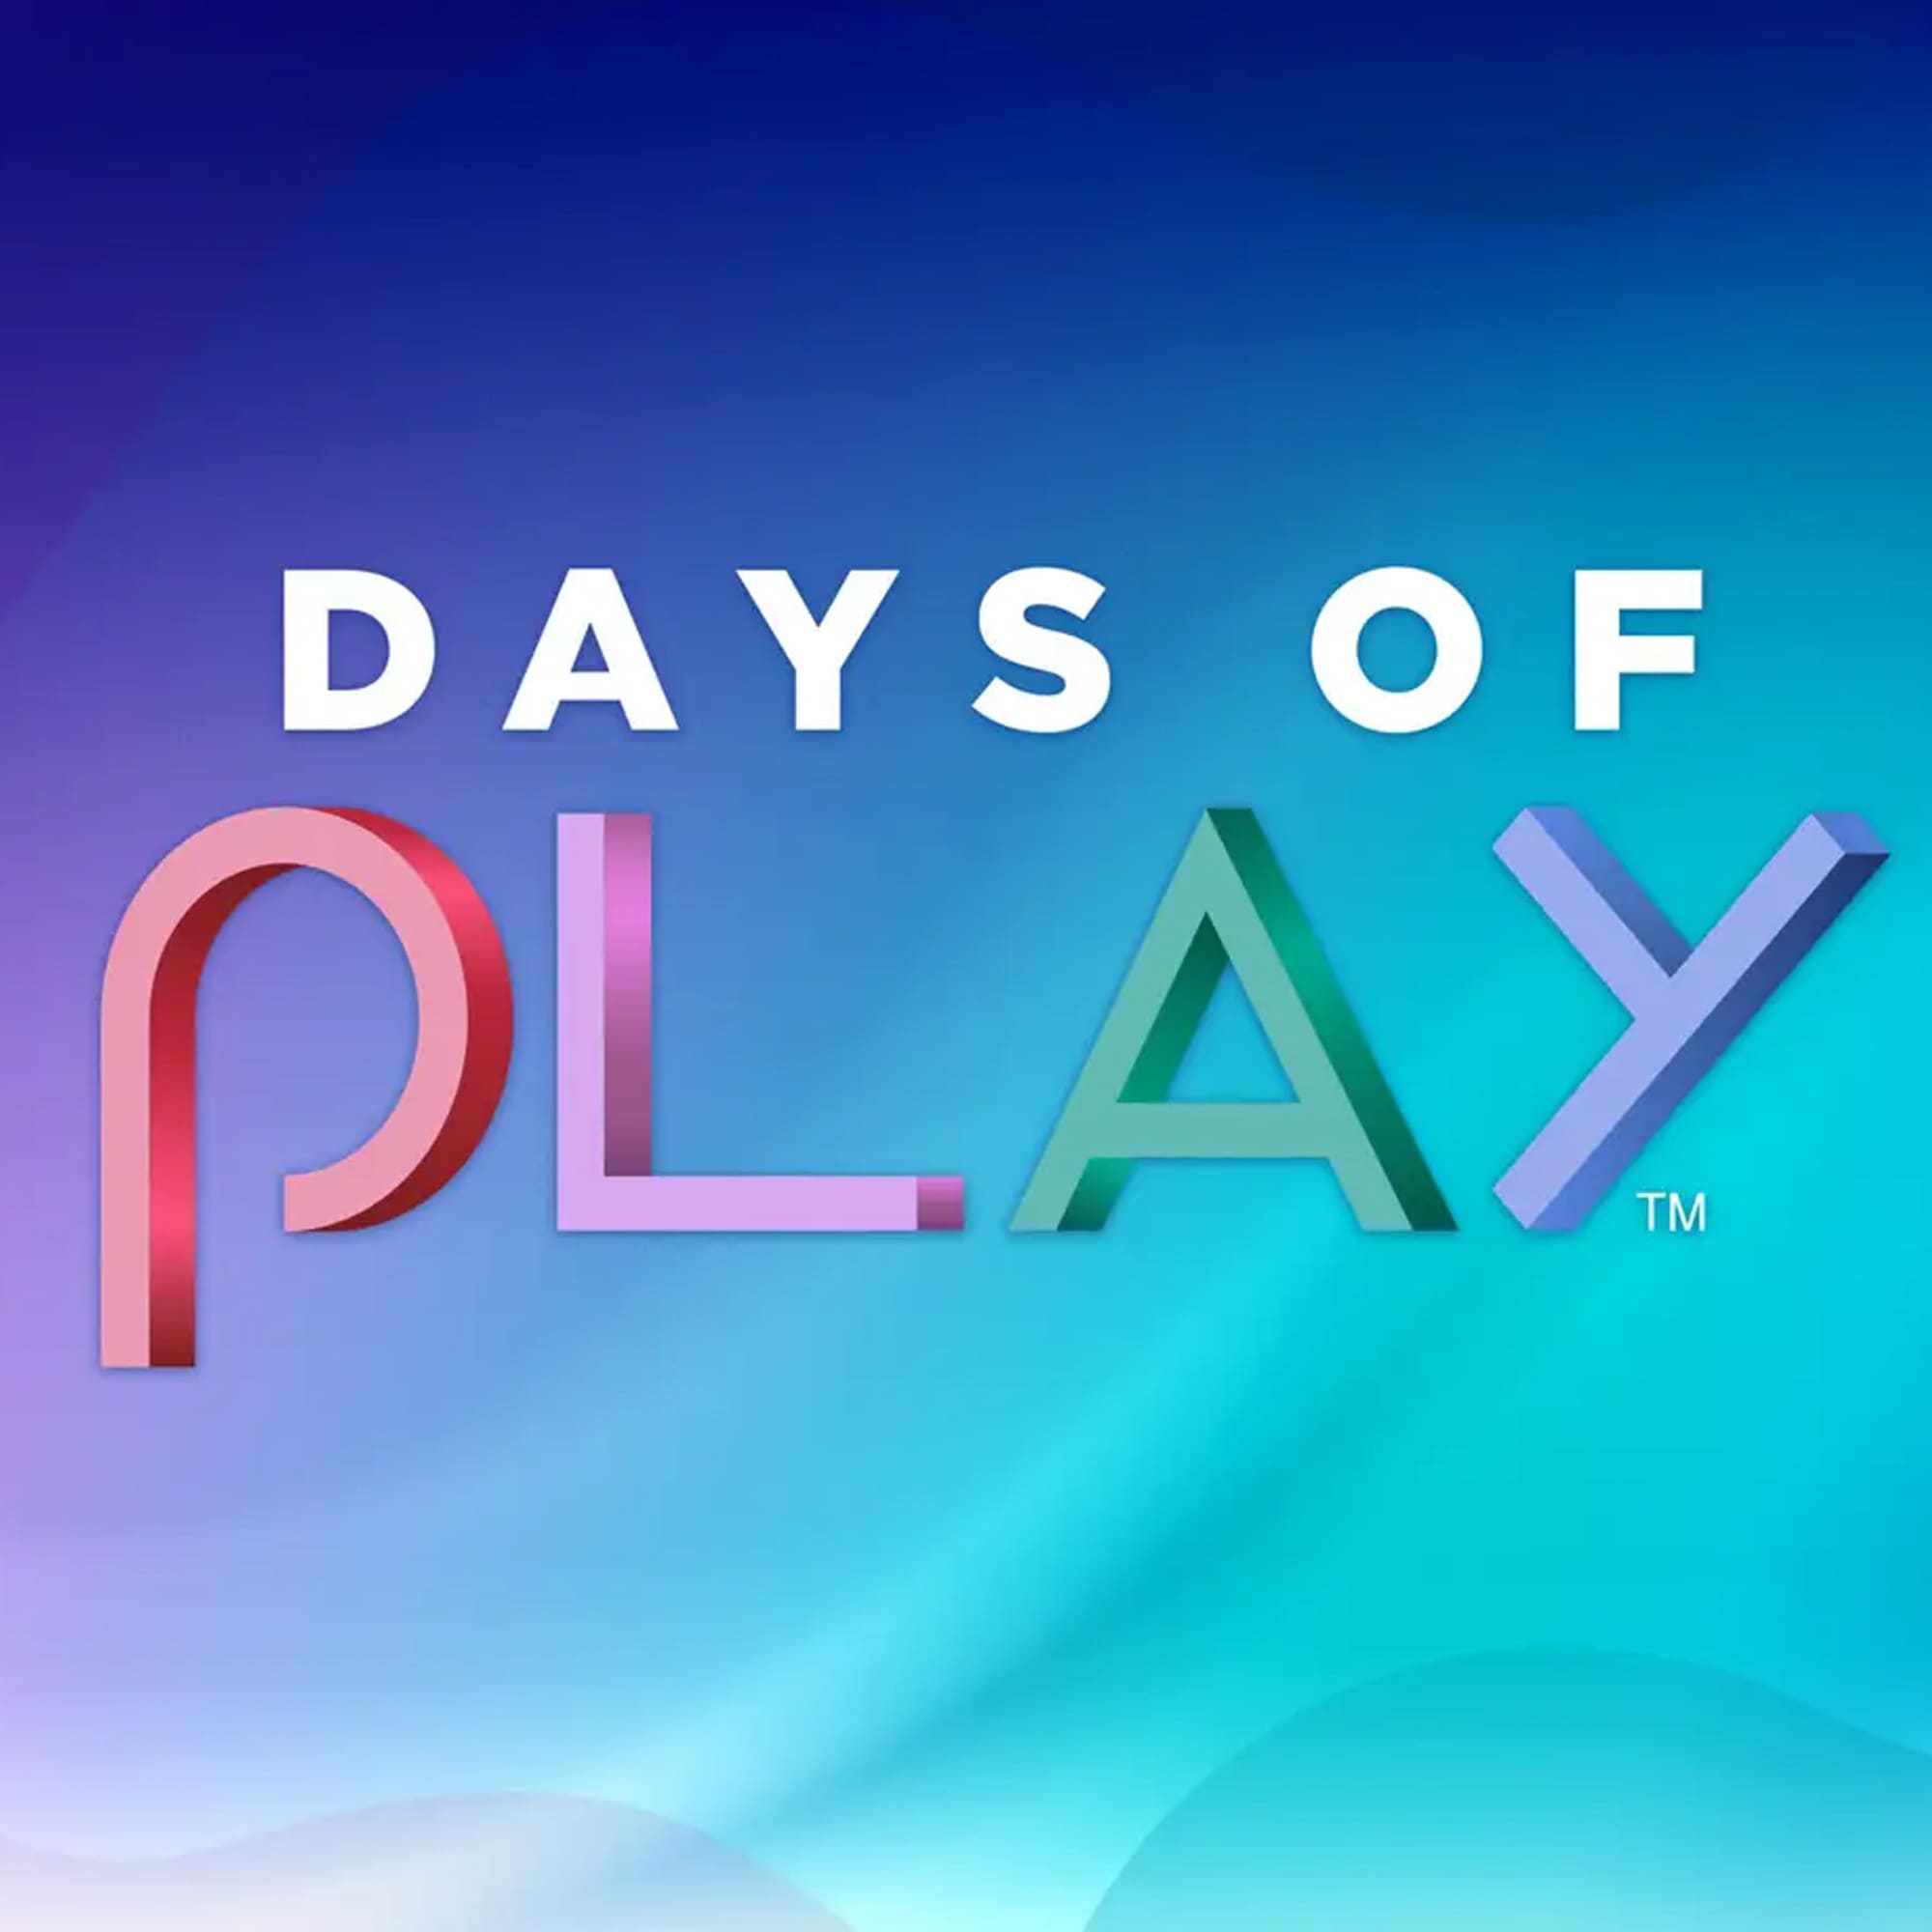 The Best Deals in PlayStation's Days of Play MegaSale POPSUGAR Australia